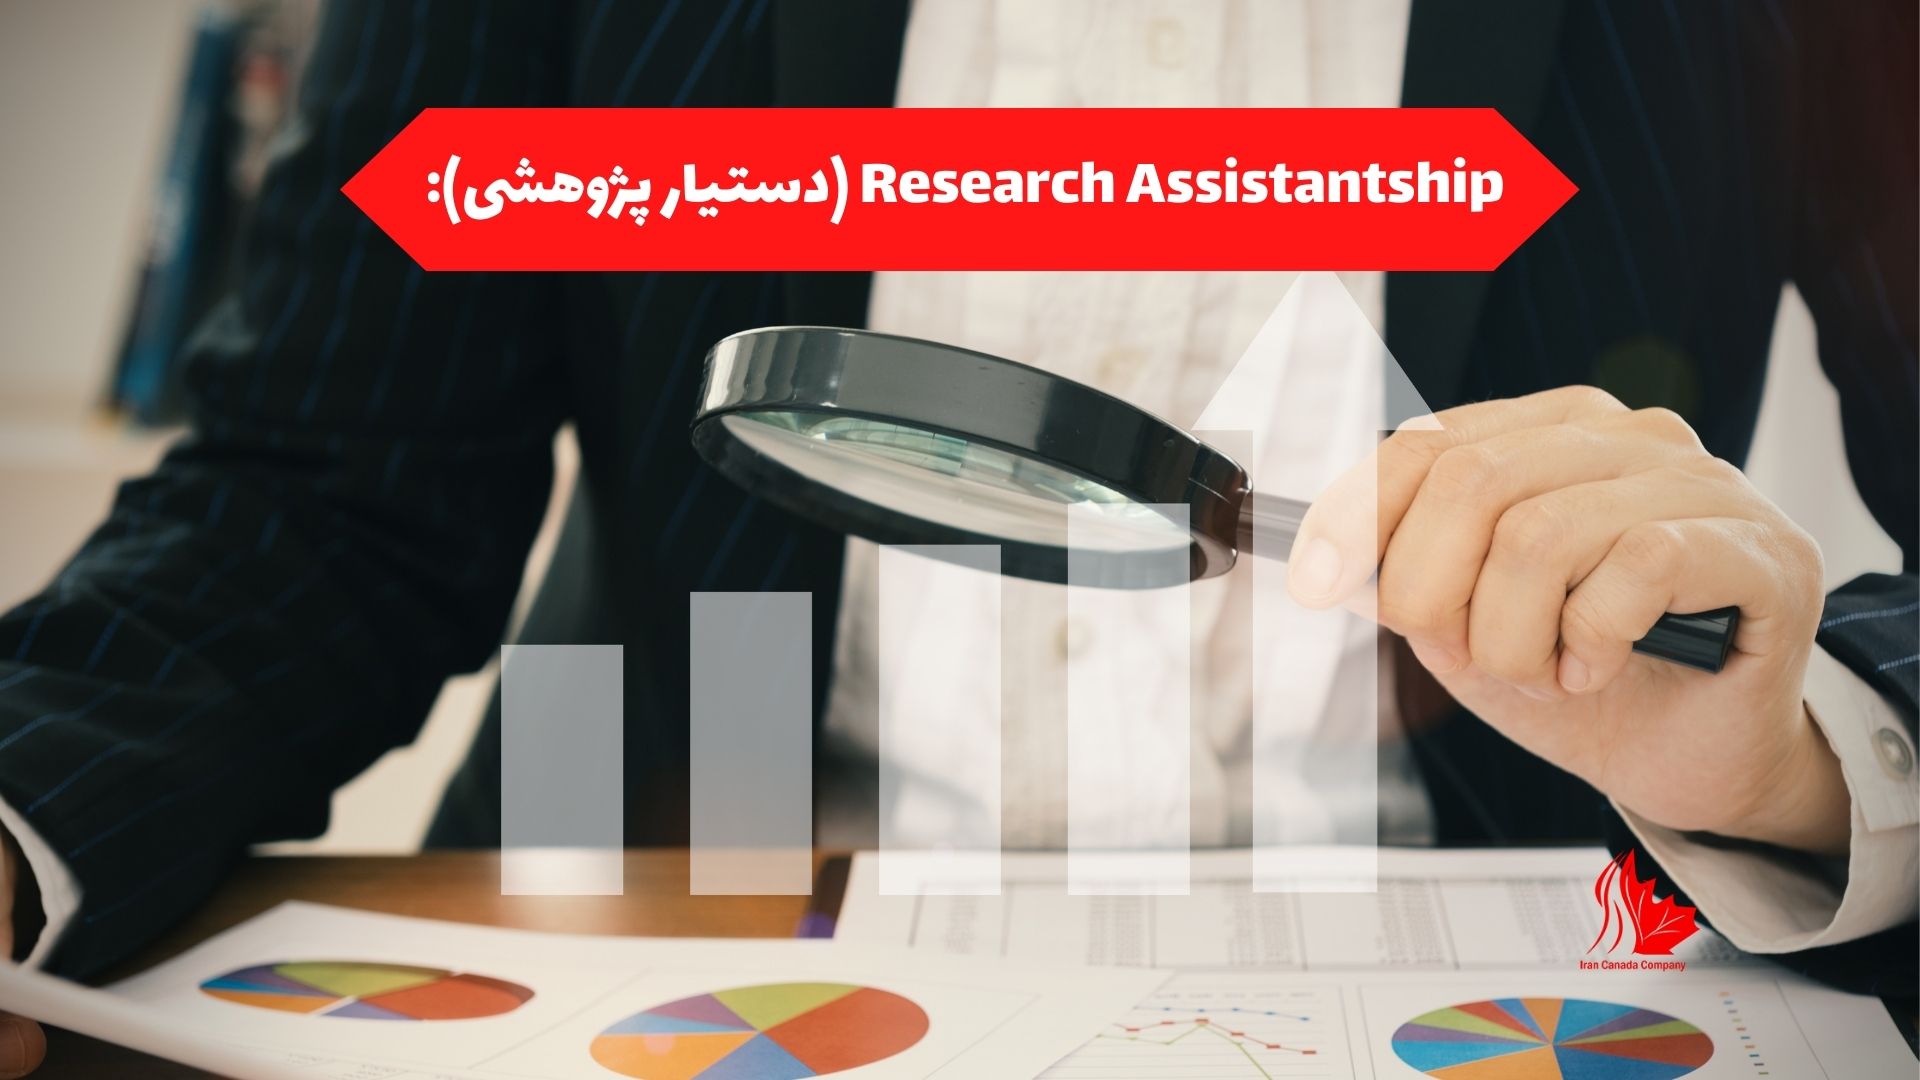 Research Assistantship (دستیار پژوهشی):